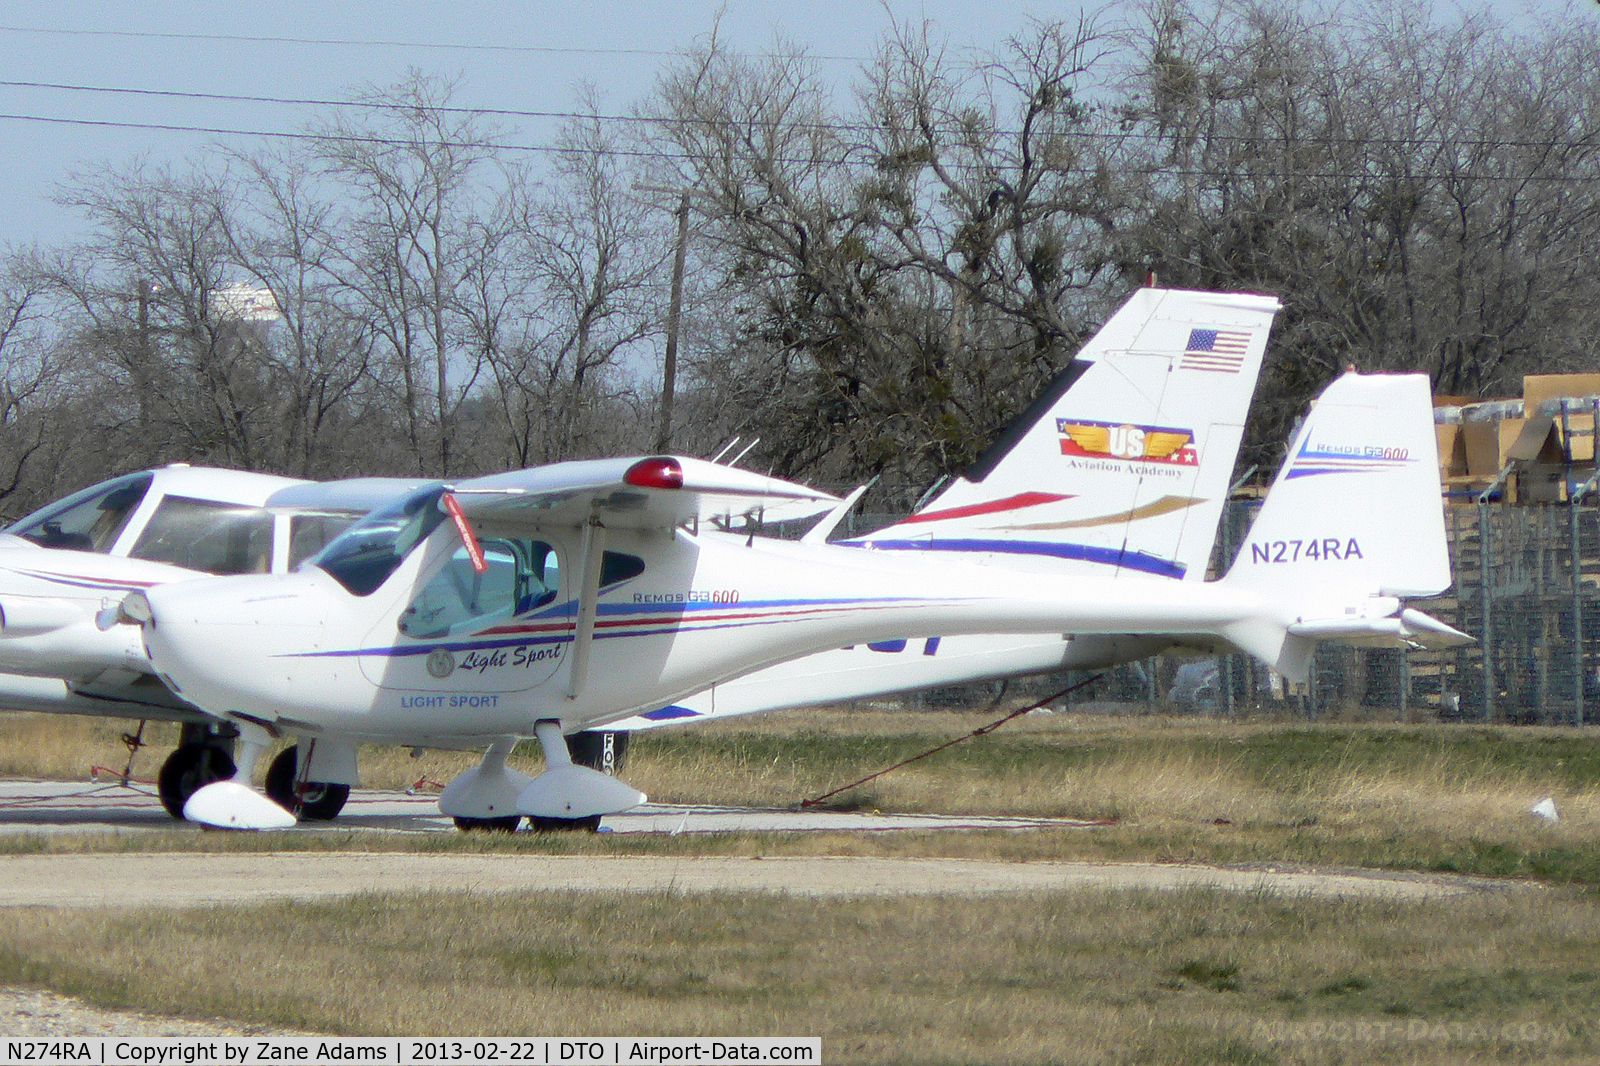 N274RA, 2007 Remos G-3/600 Mirage C/N 235, At the Denton Municipal Airport